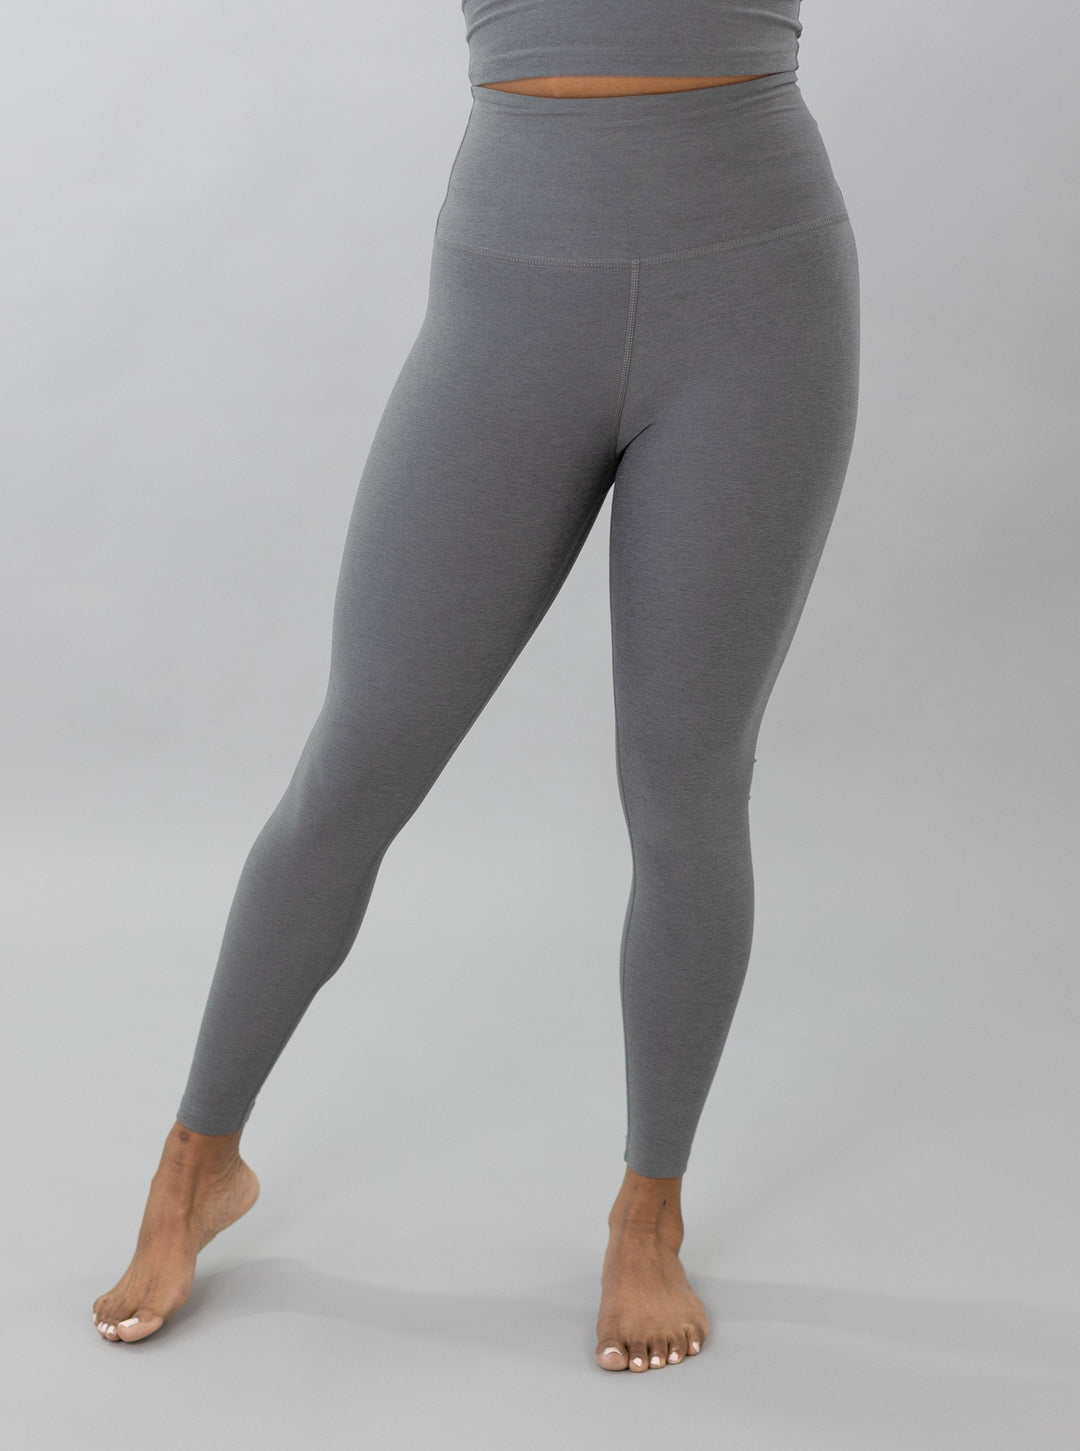 Beyond Yoga Gray Active Pants Size L - 48% off